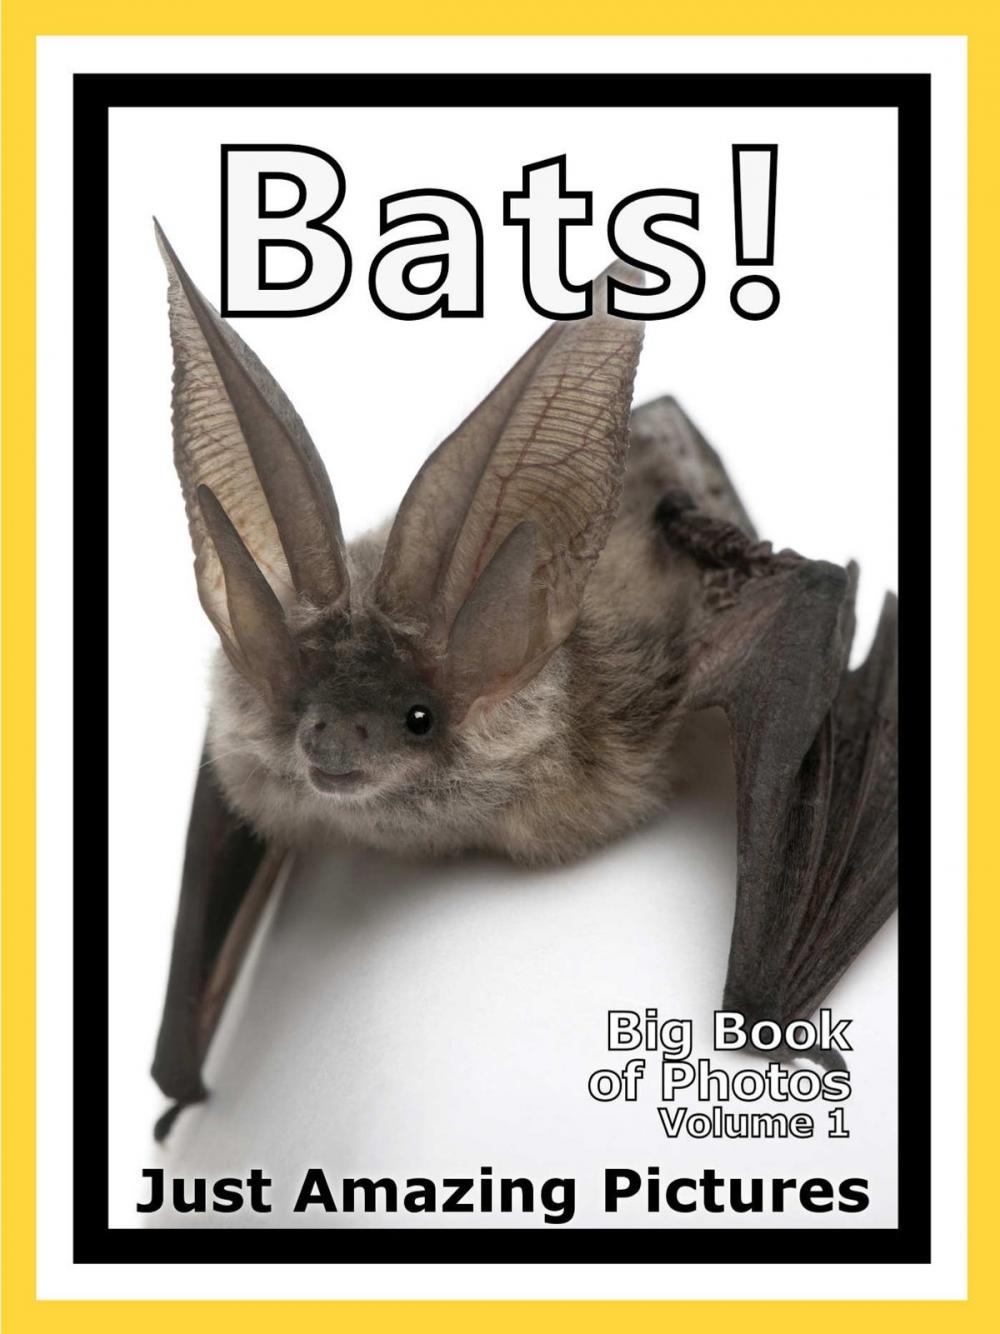 Big bigCover of Just Bat Photos! Big Book of Photographs & Pictures of Bats, Vol. 1